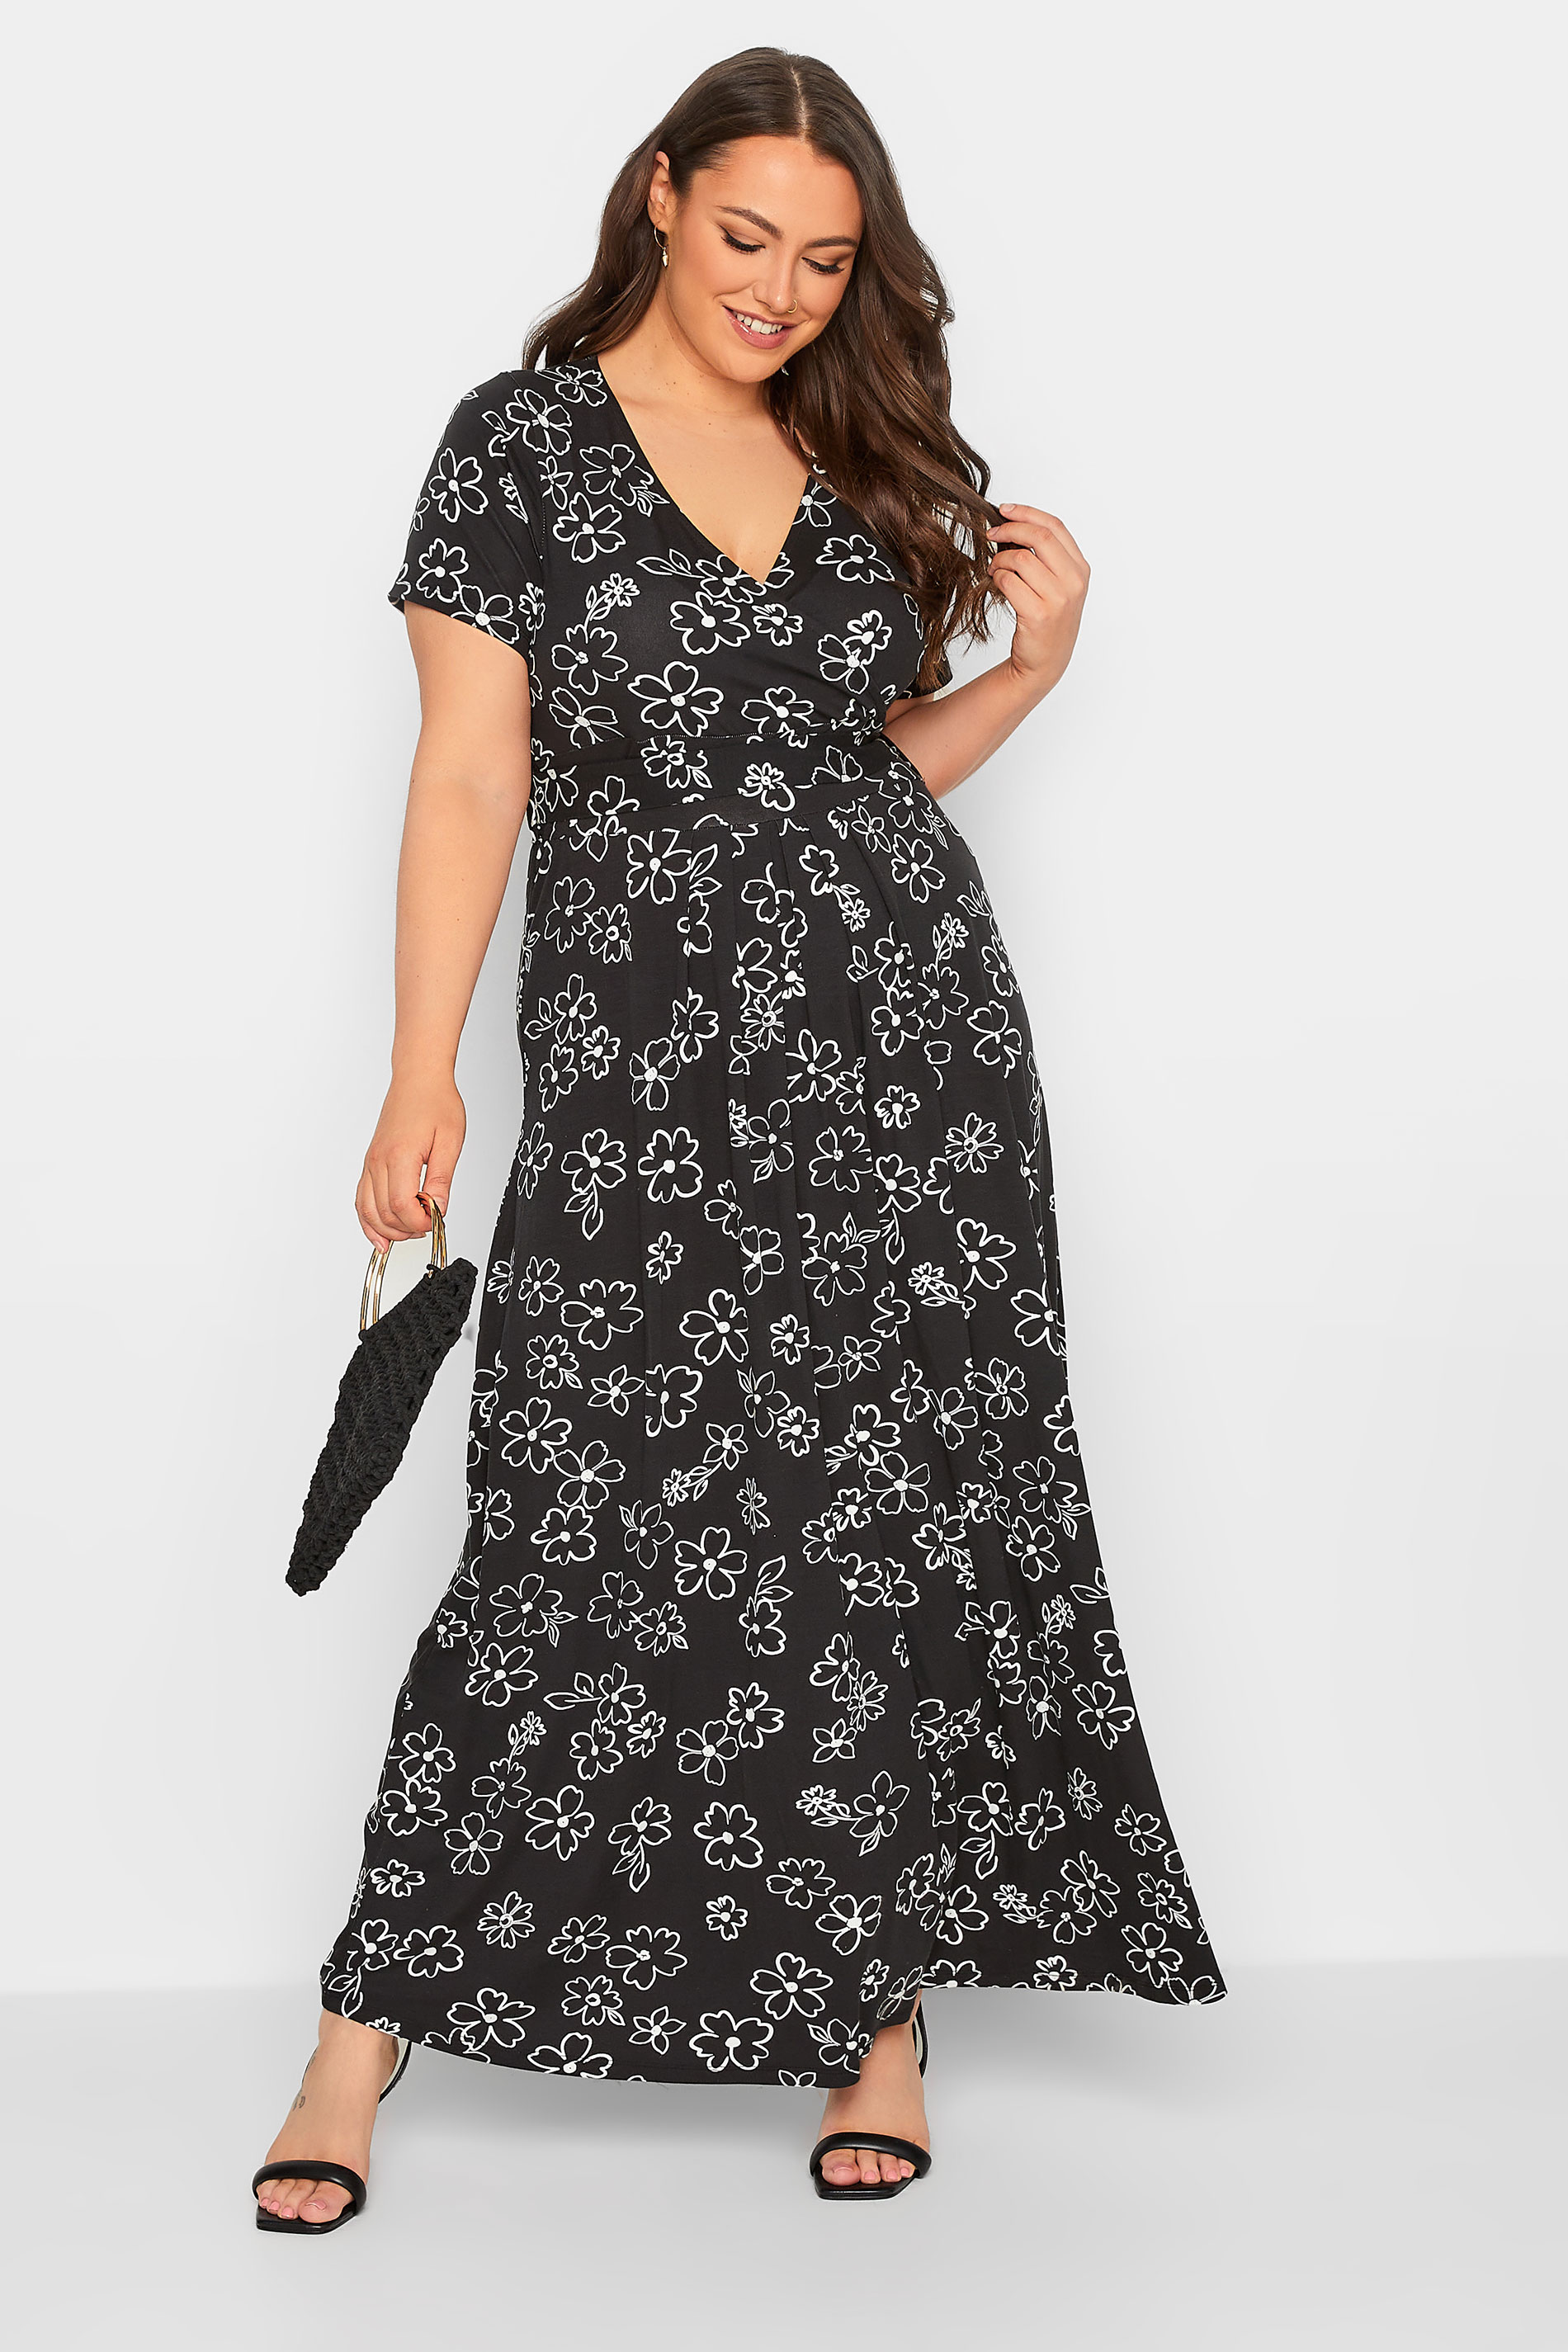 YOURS Curve Plus Size Black Floral Wrap Dress | Yours Clothing  2